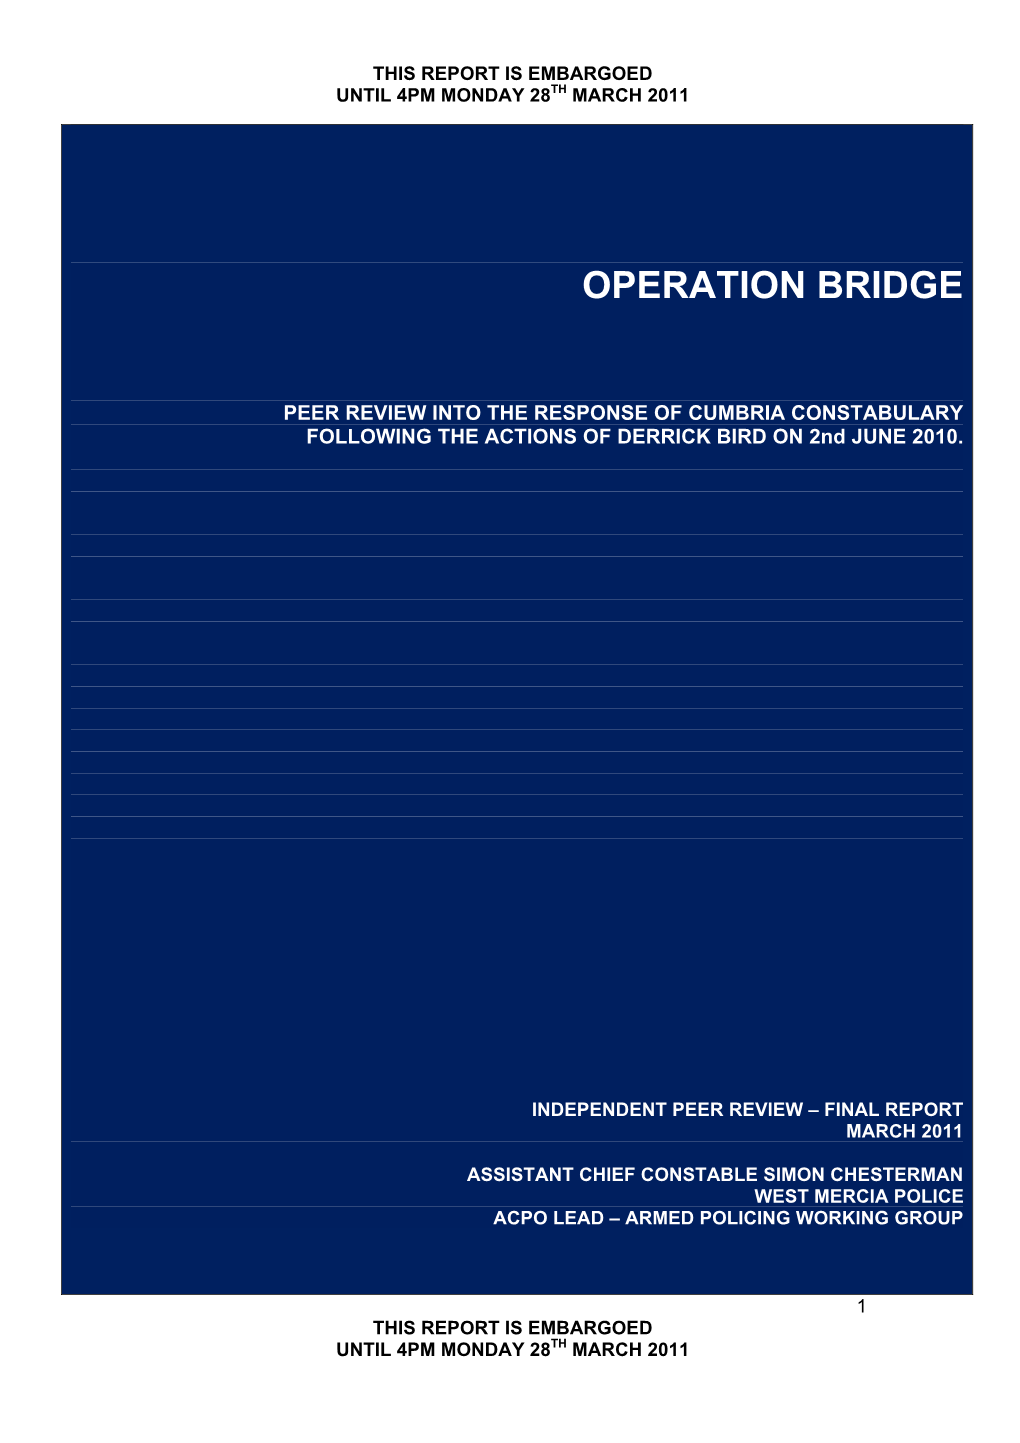 Operation Bridge